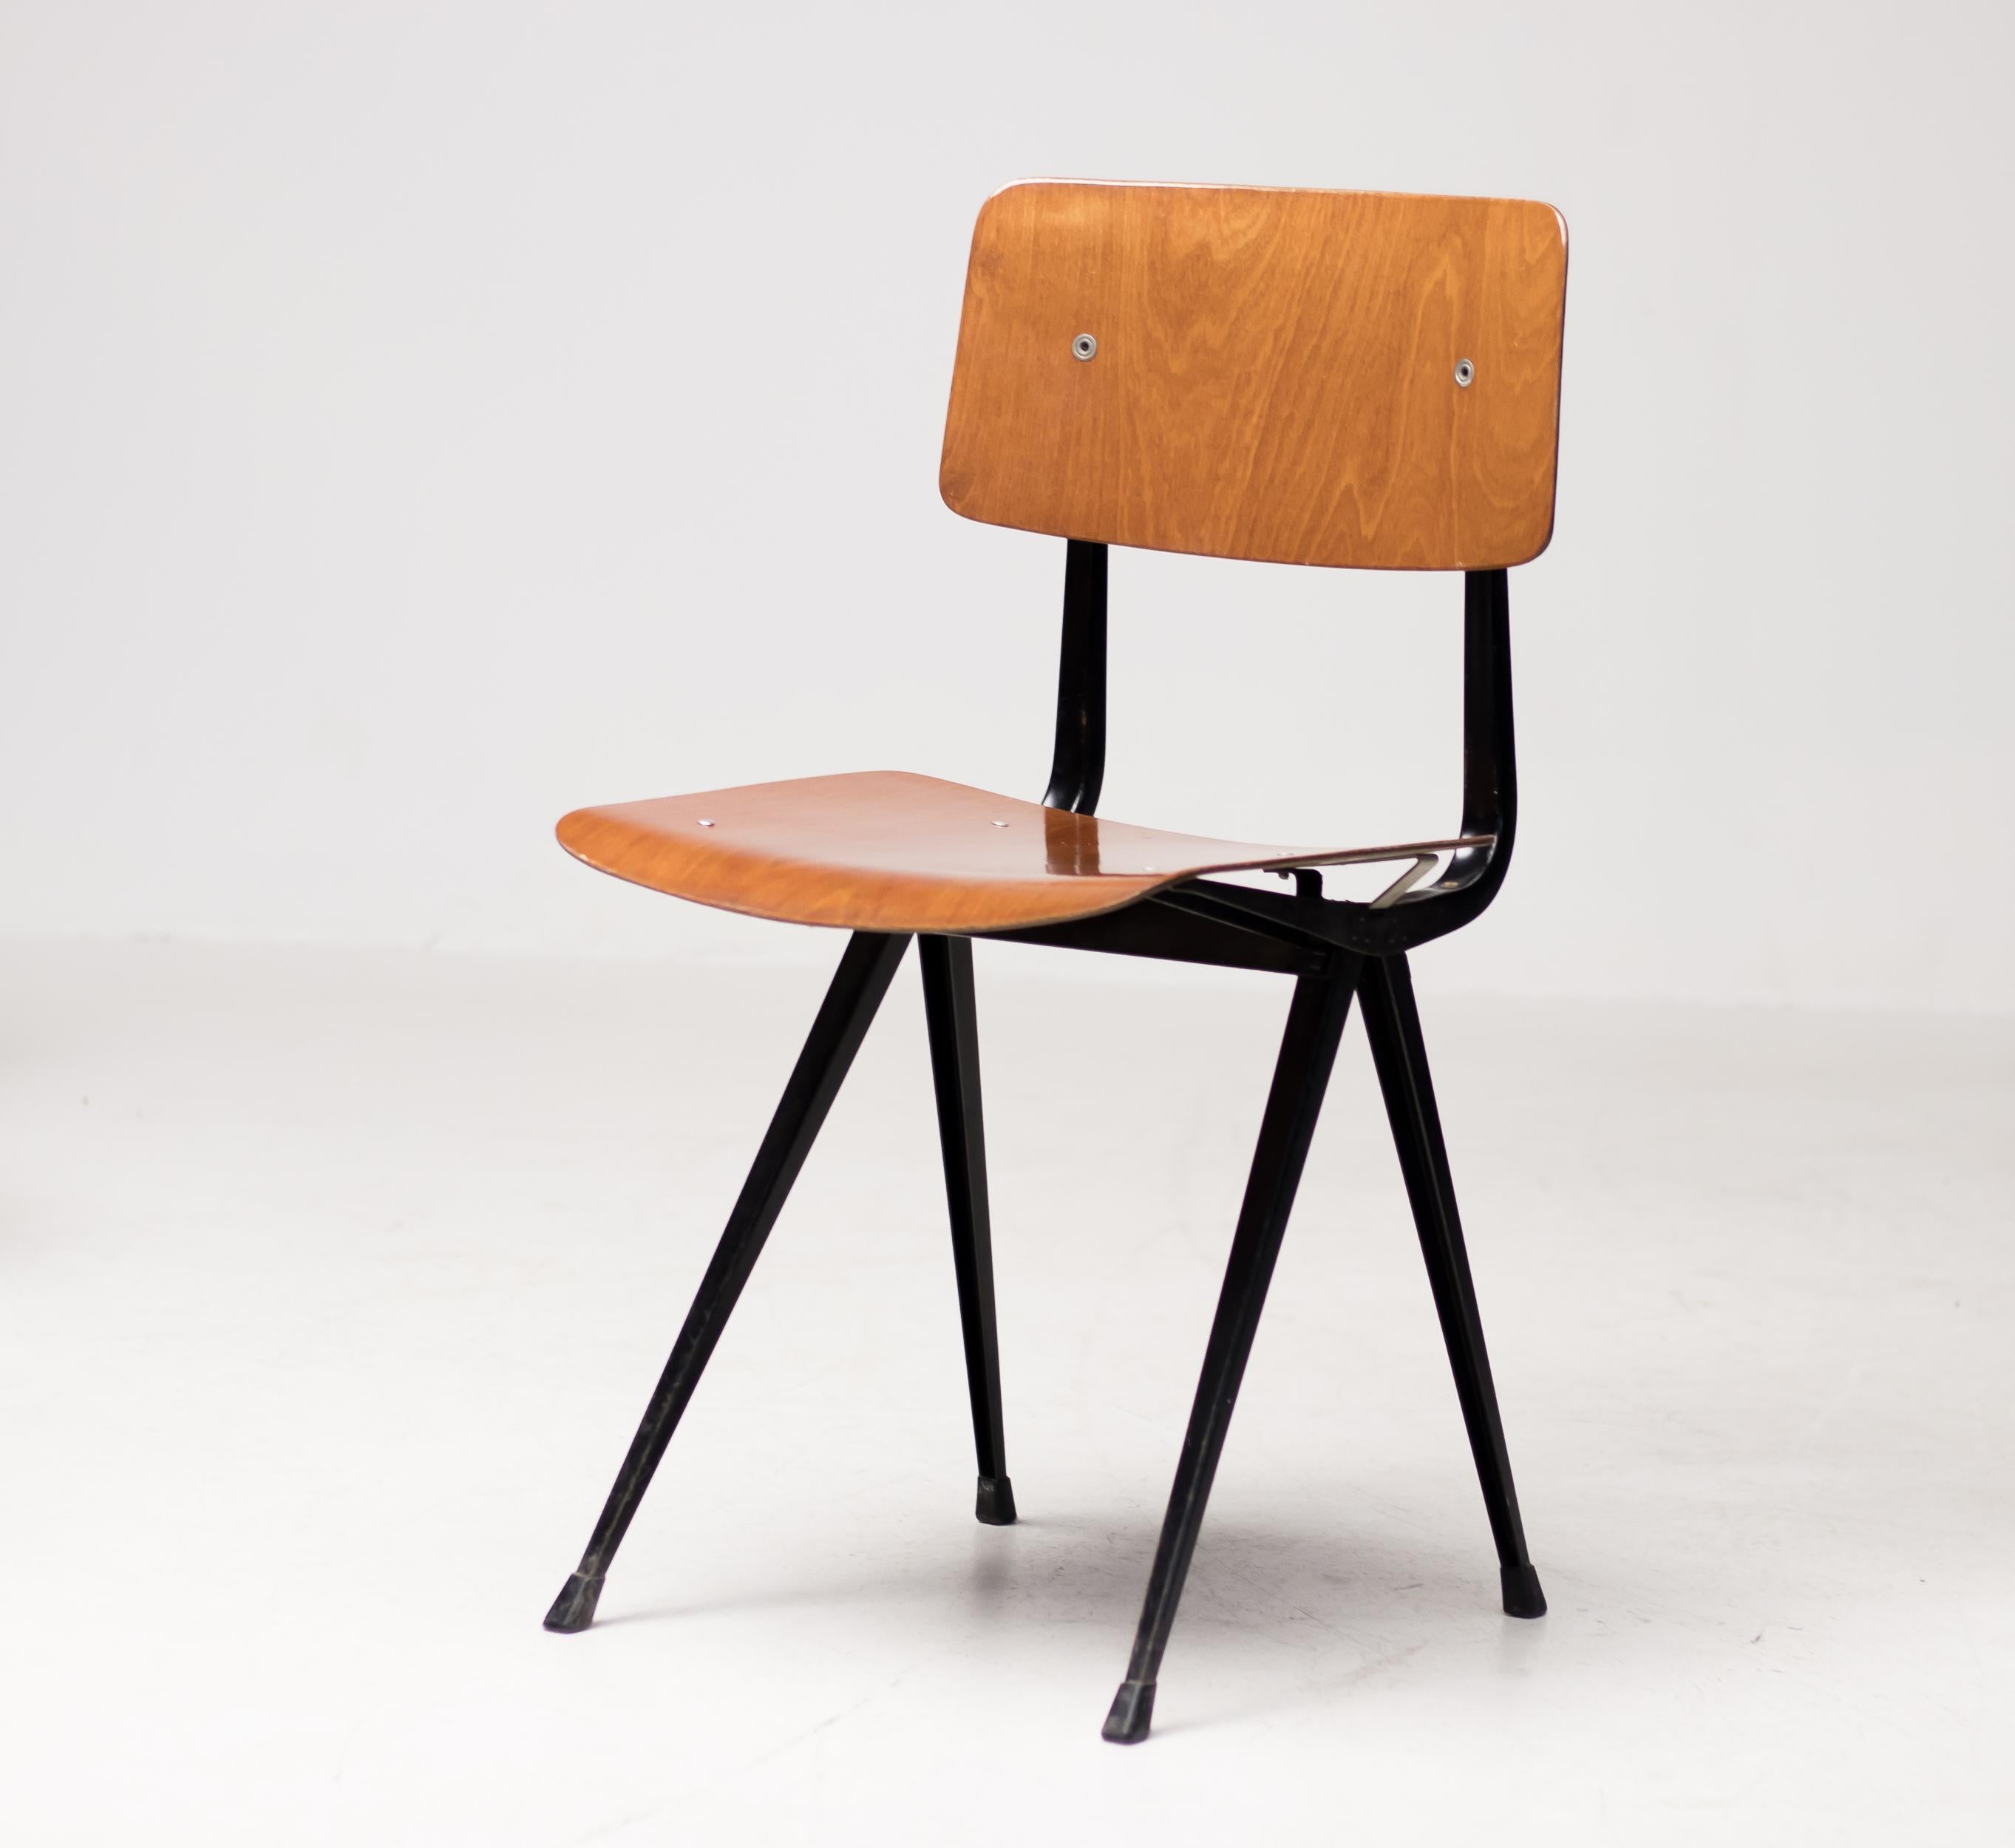 Twelve Friso Kramer Result Chairs, 1952 (Industriell)